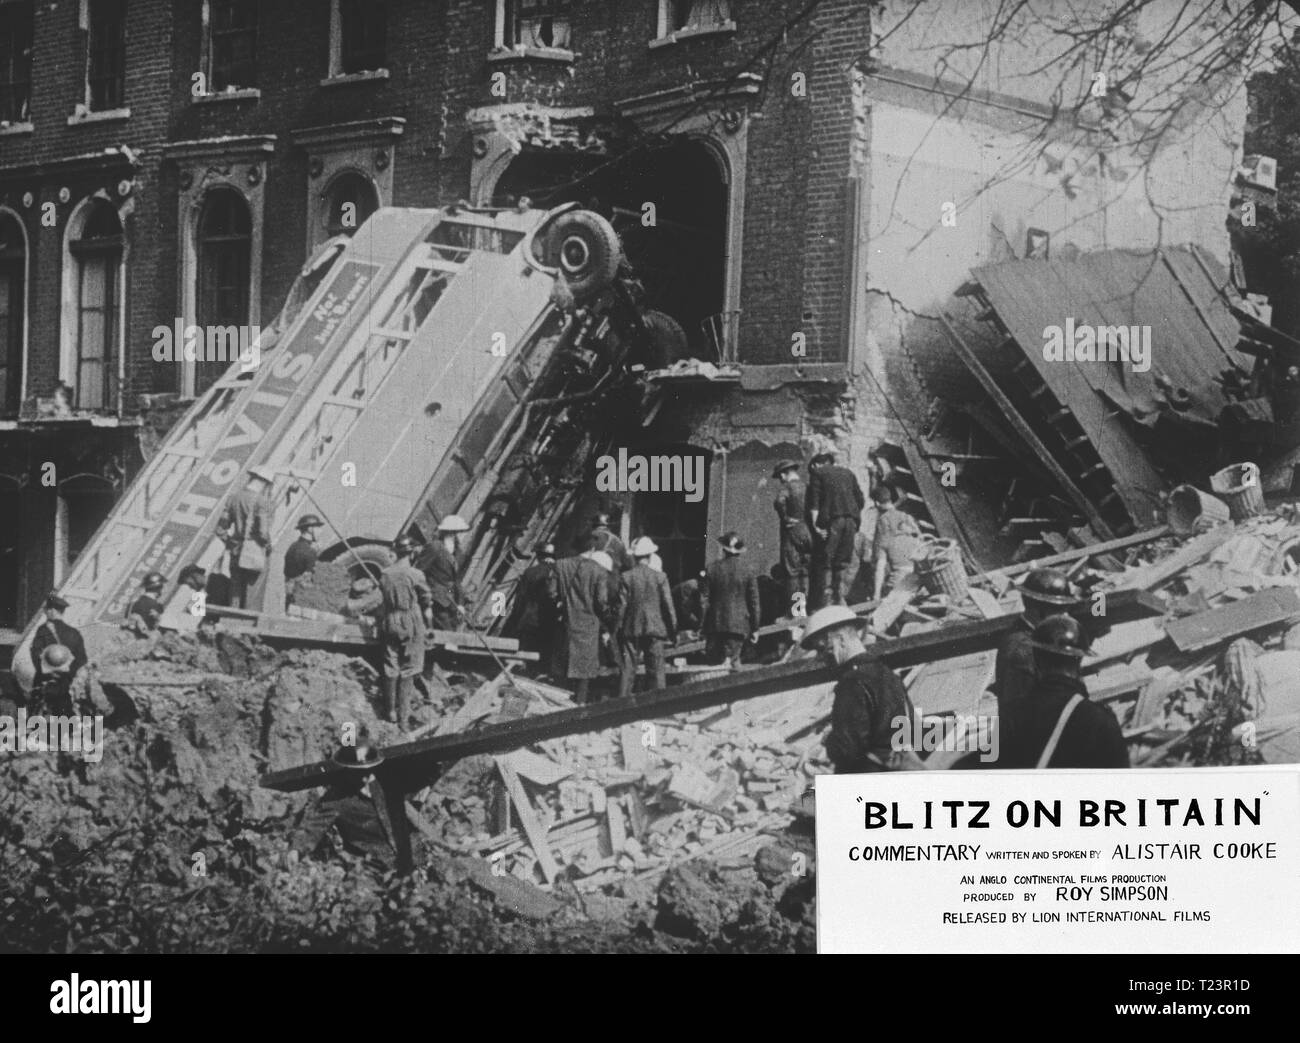 Blitz on Britain (1960) Documentary film on the Blitz during World War II      Date: 1960 Stock Photo